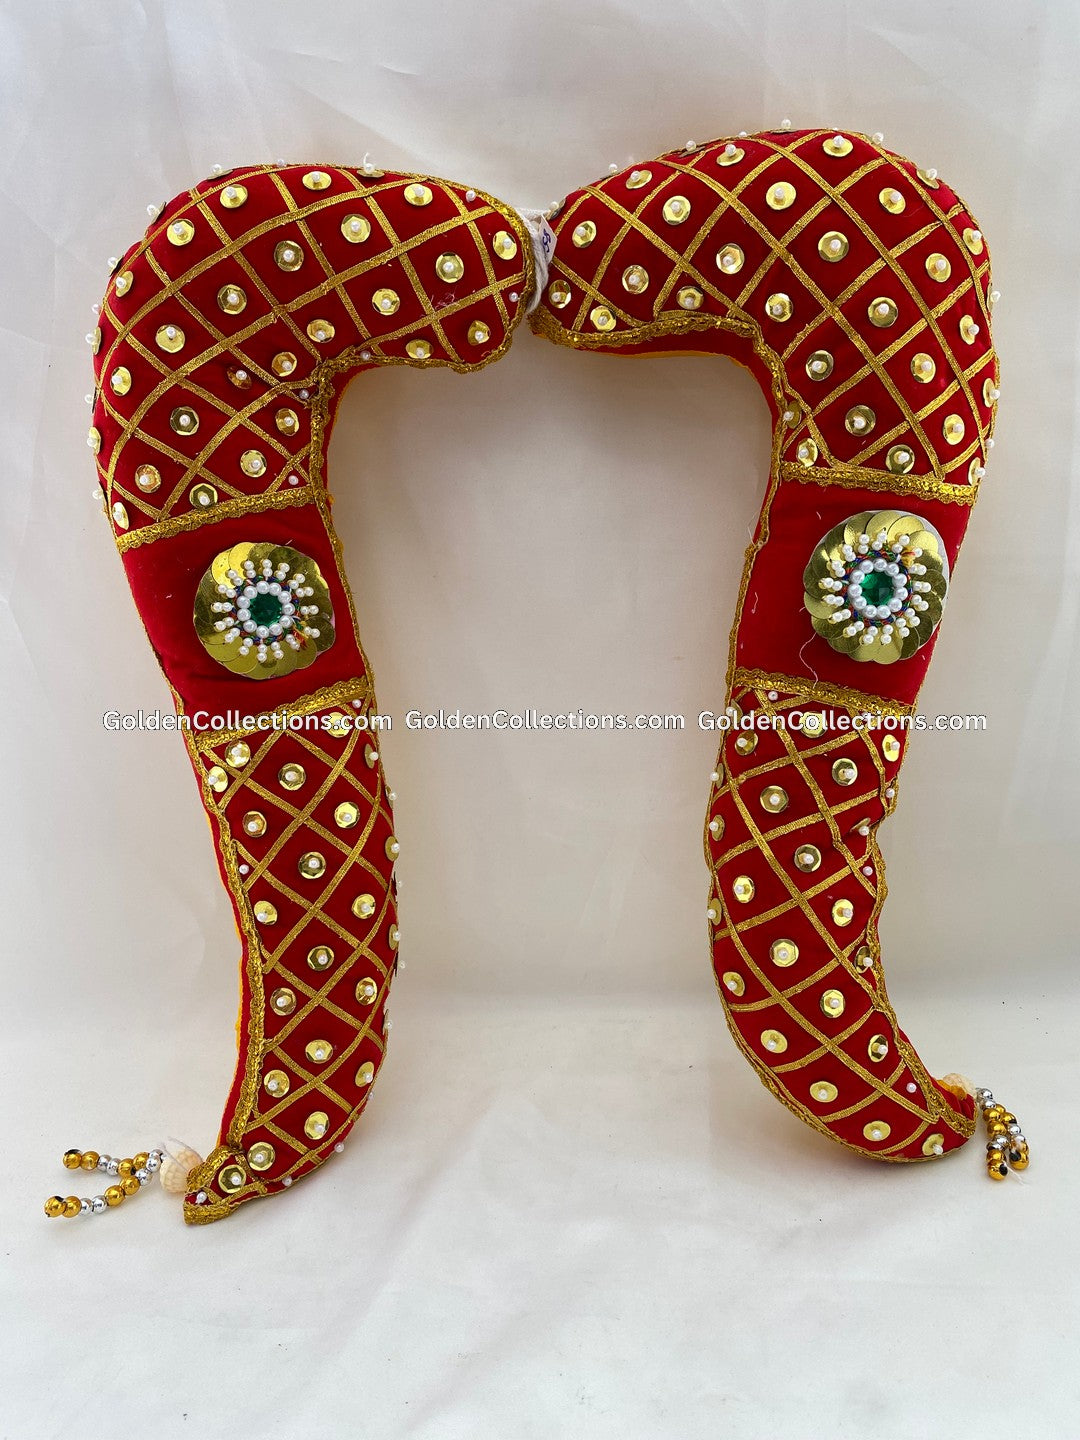 Vagamalai Bhujalu - Varalakshmi Idol Decoration Items Online Medium Red DVT-005 2